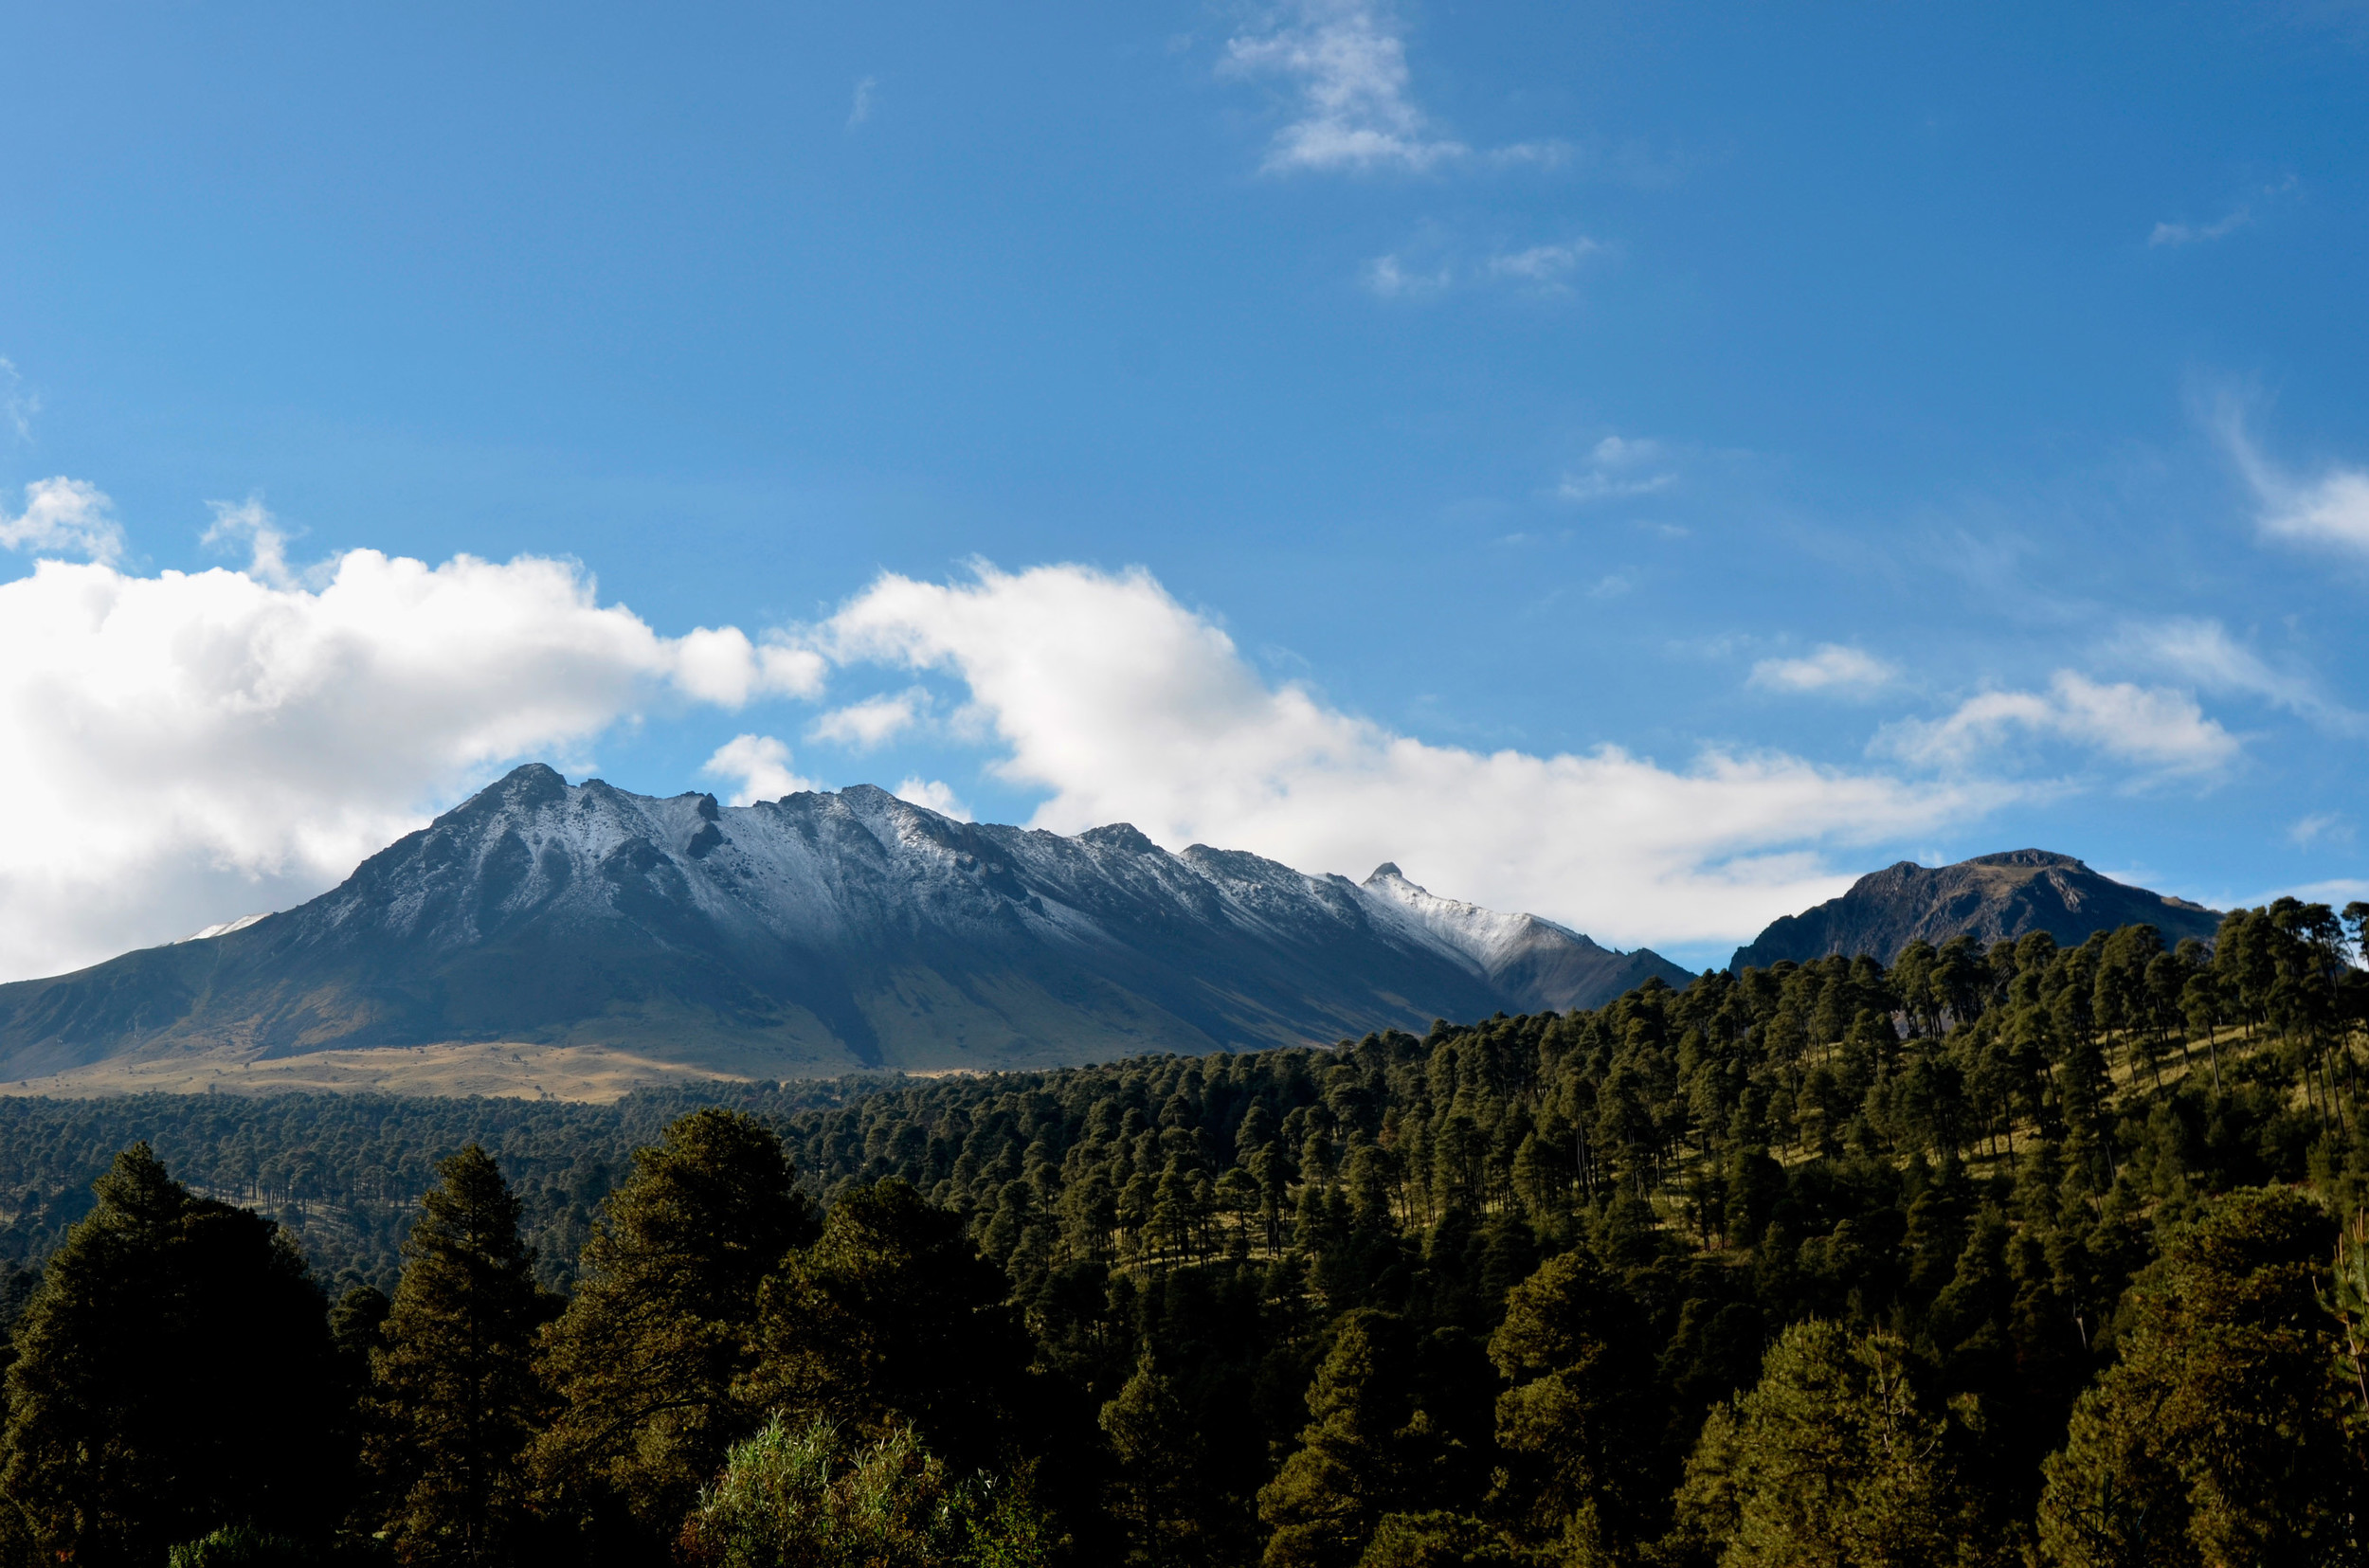 Aprueba Semarnat tala comercial del 33% de bosque del Nevado de Toluca